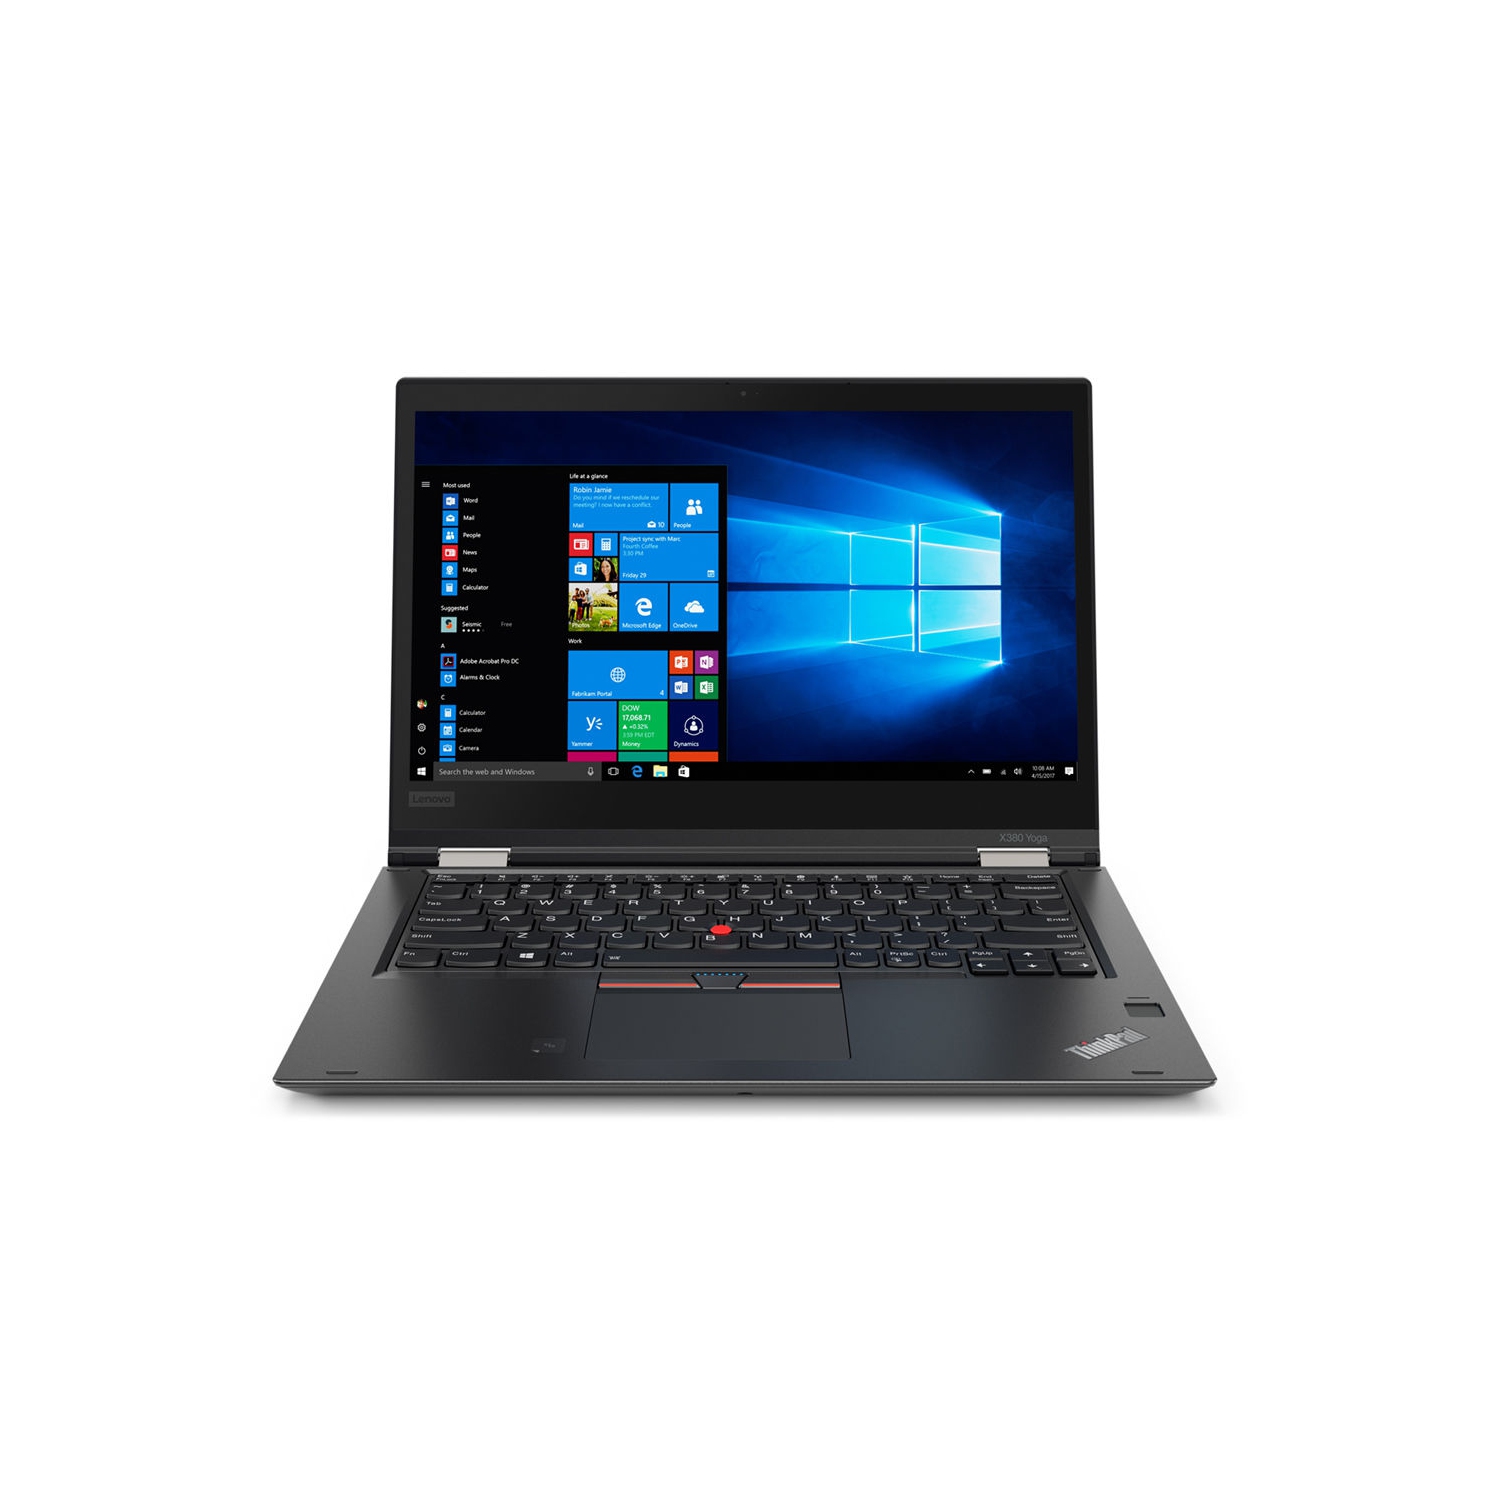 Refurbished (Good) - Lenovo Yoga 370 13.3" 2-in-1 Laptop, Core i5-7300U, 8 GB DDR4, 256 GB SSD, Windows 10 Pro